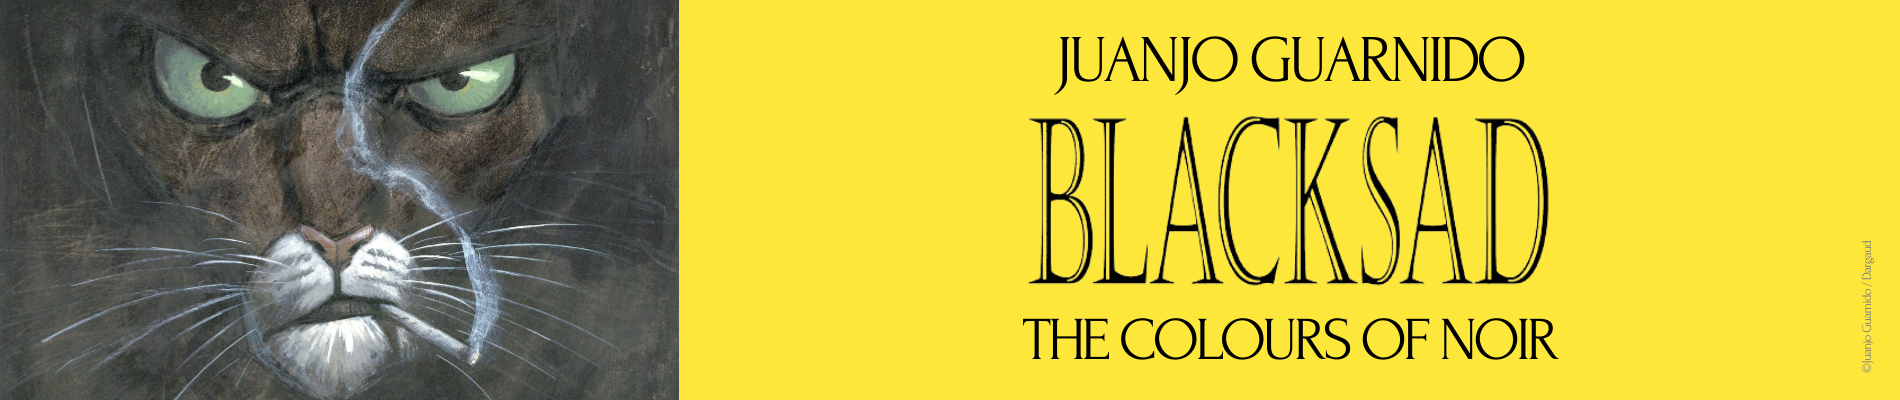 Juanjo Guarnido. Blacksad, the colours of noir